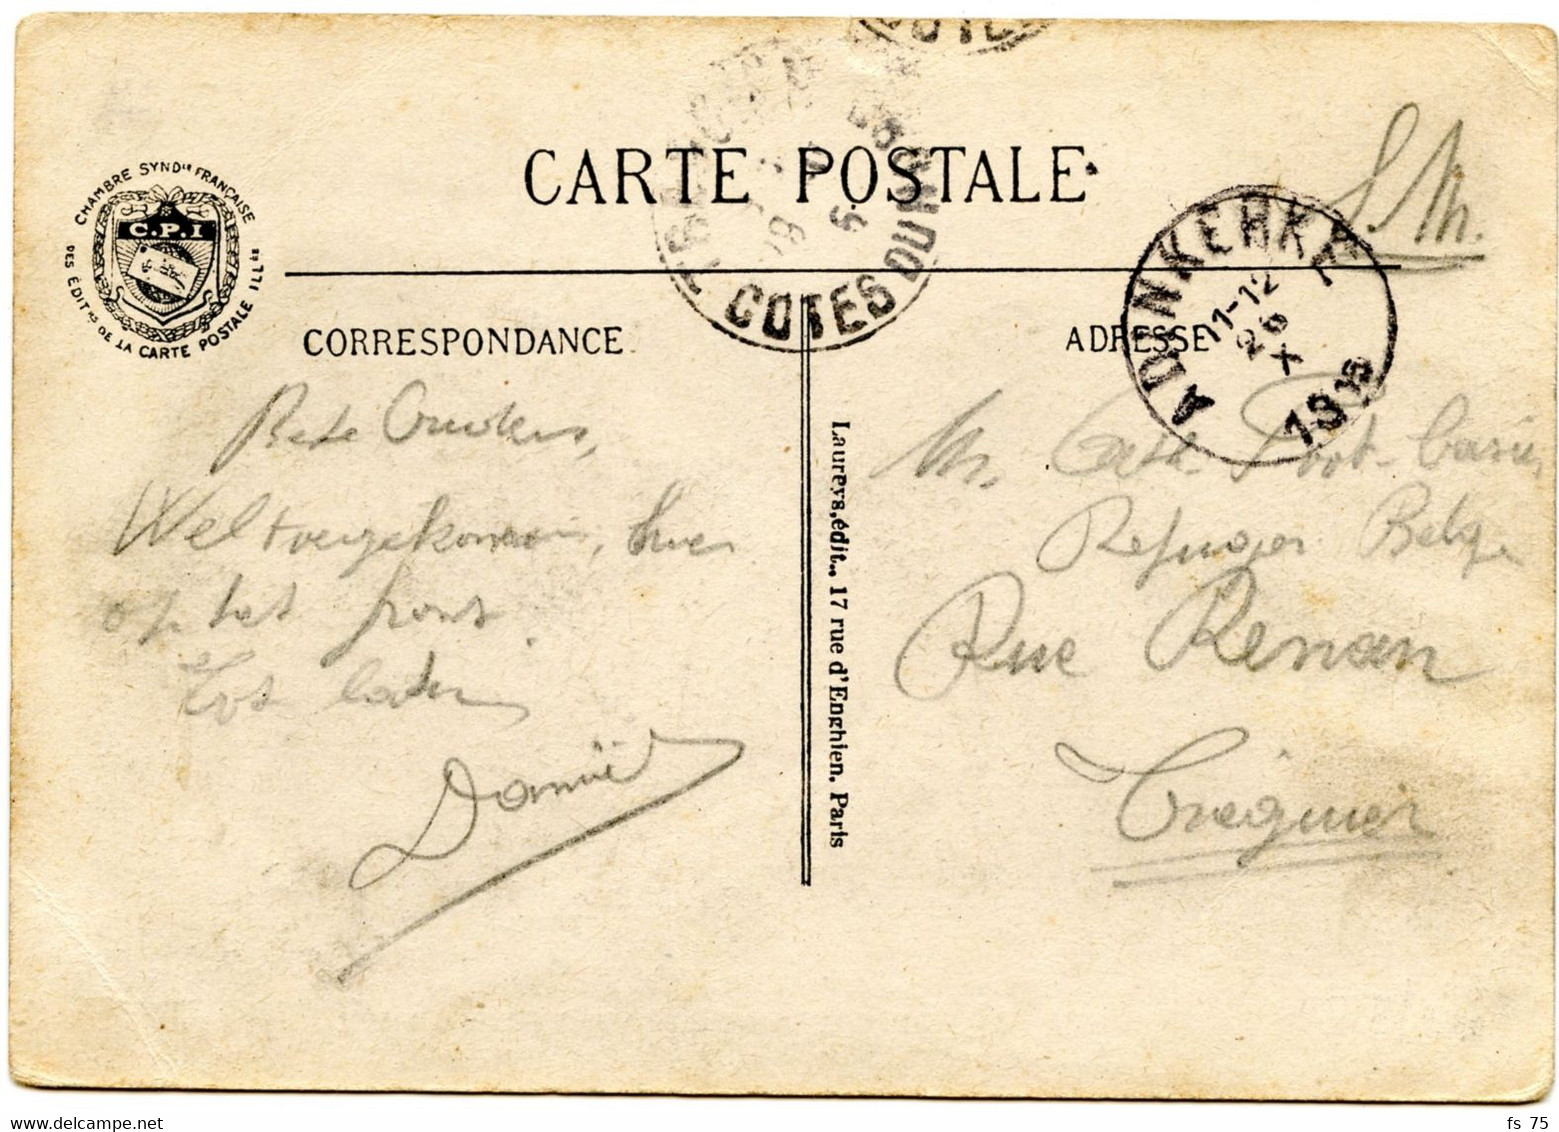 BELGIQUE - SIMPLE CERCLE ADINKERKE SUR CARTE POSTALE EN FRANCHISE, 1915 - Niet-bezet Gebied